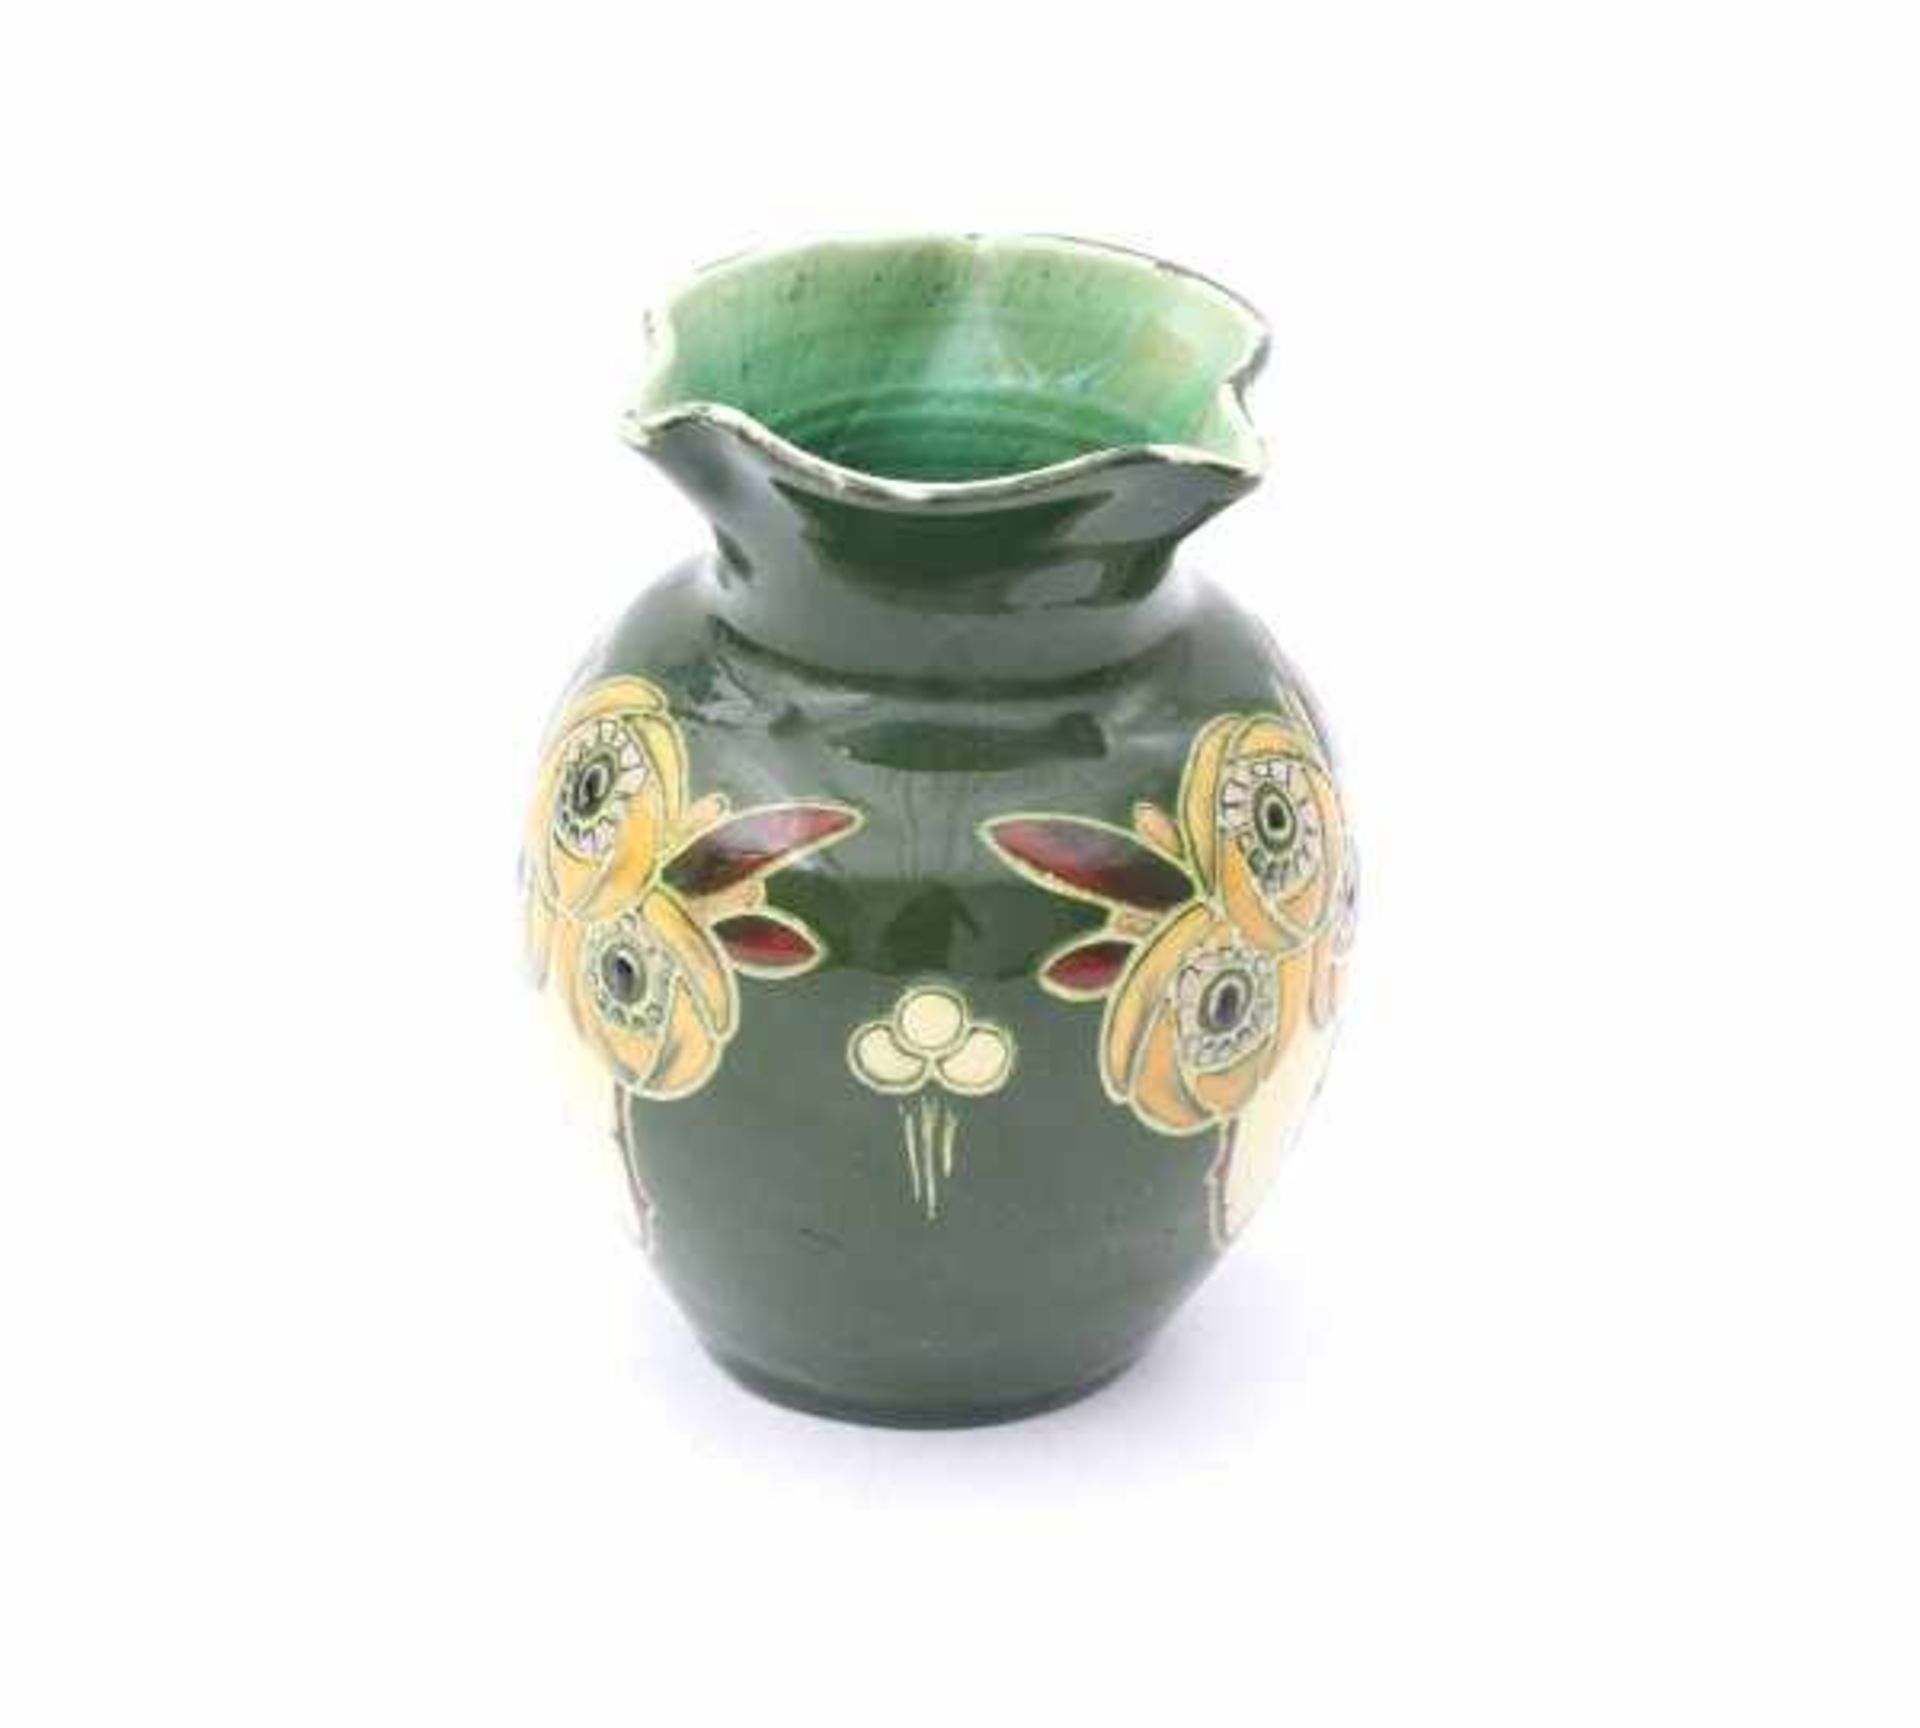 Baron, BarnstapleAn Art Nouveau ceramic vase decorated with repeating stylized floral pattern, - Bild 2 aus 3